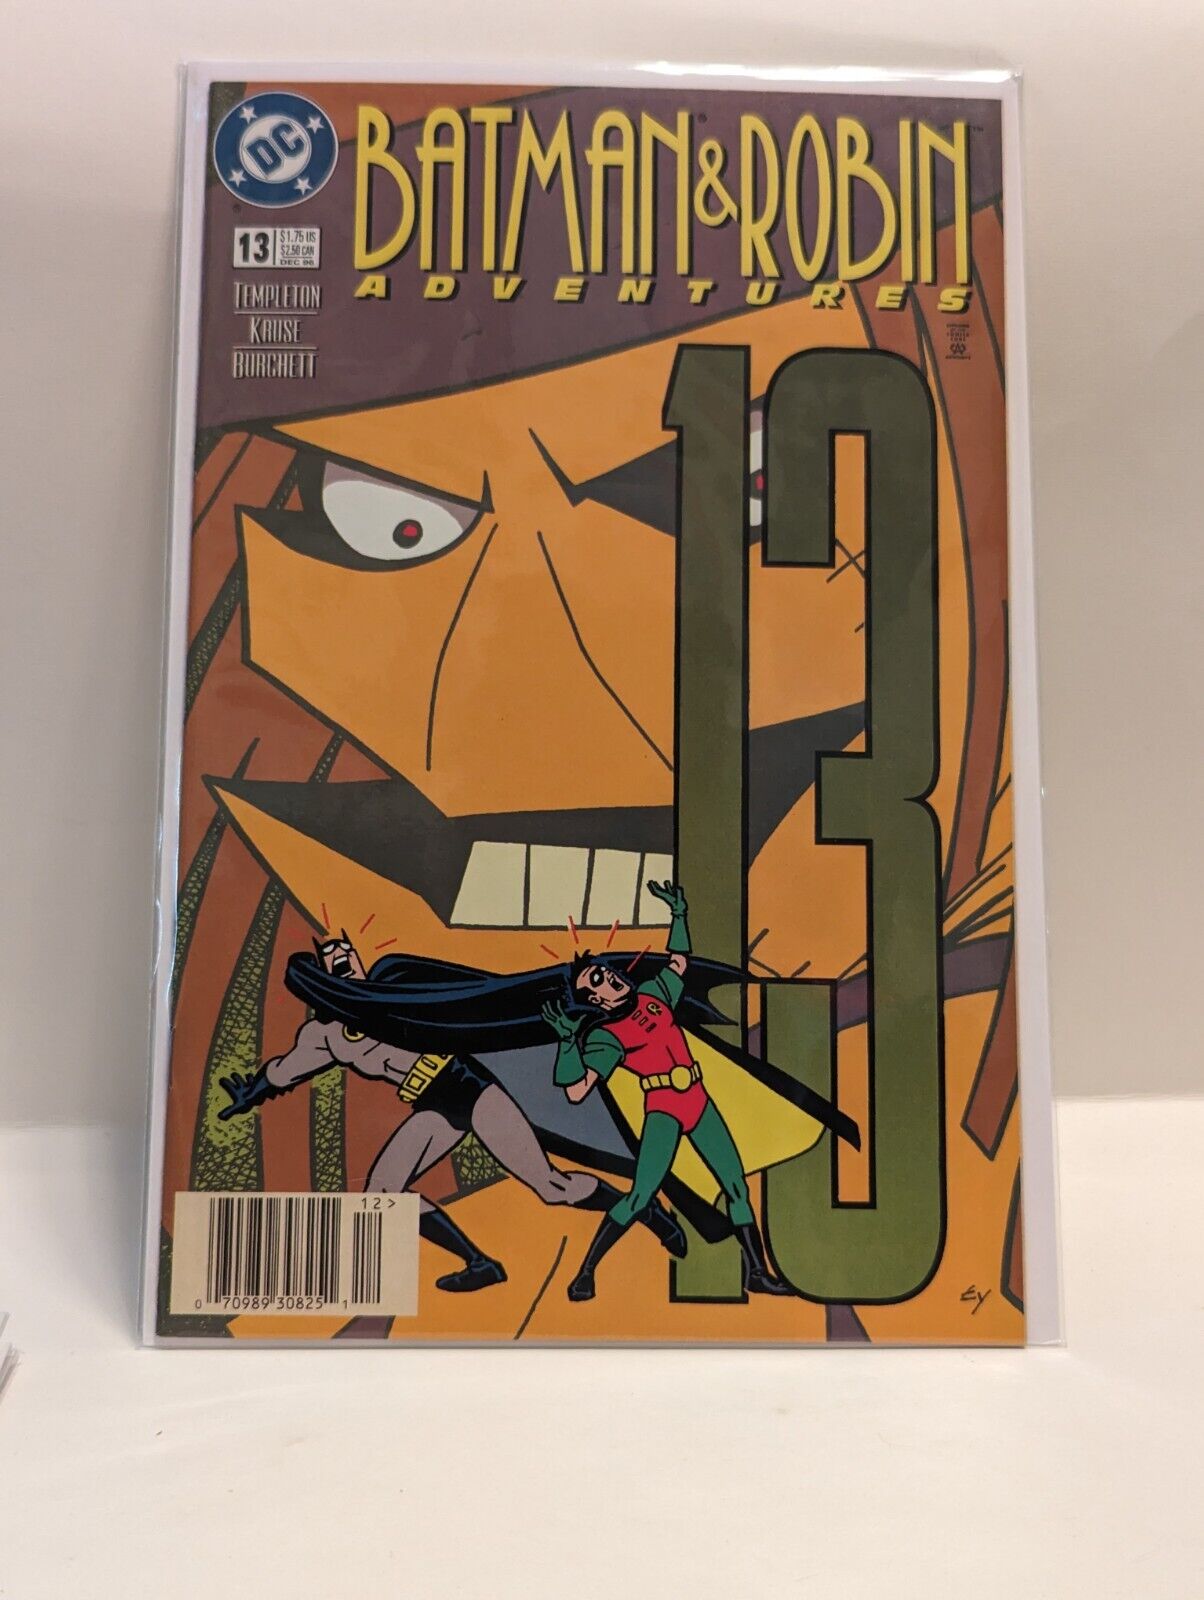 Batman and Robin Adventures #13 1996